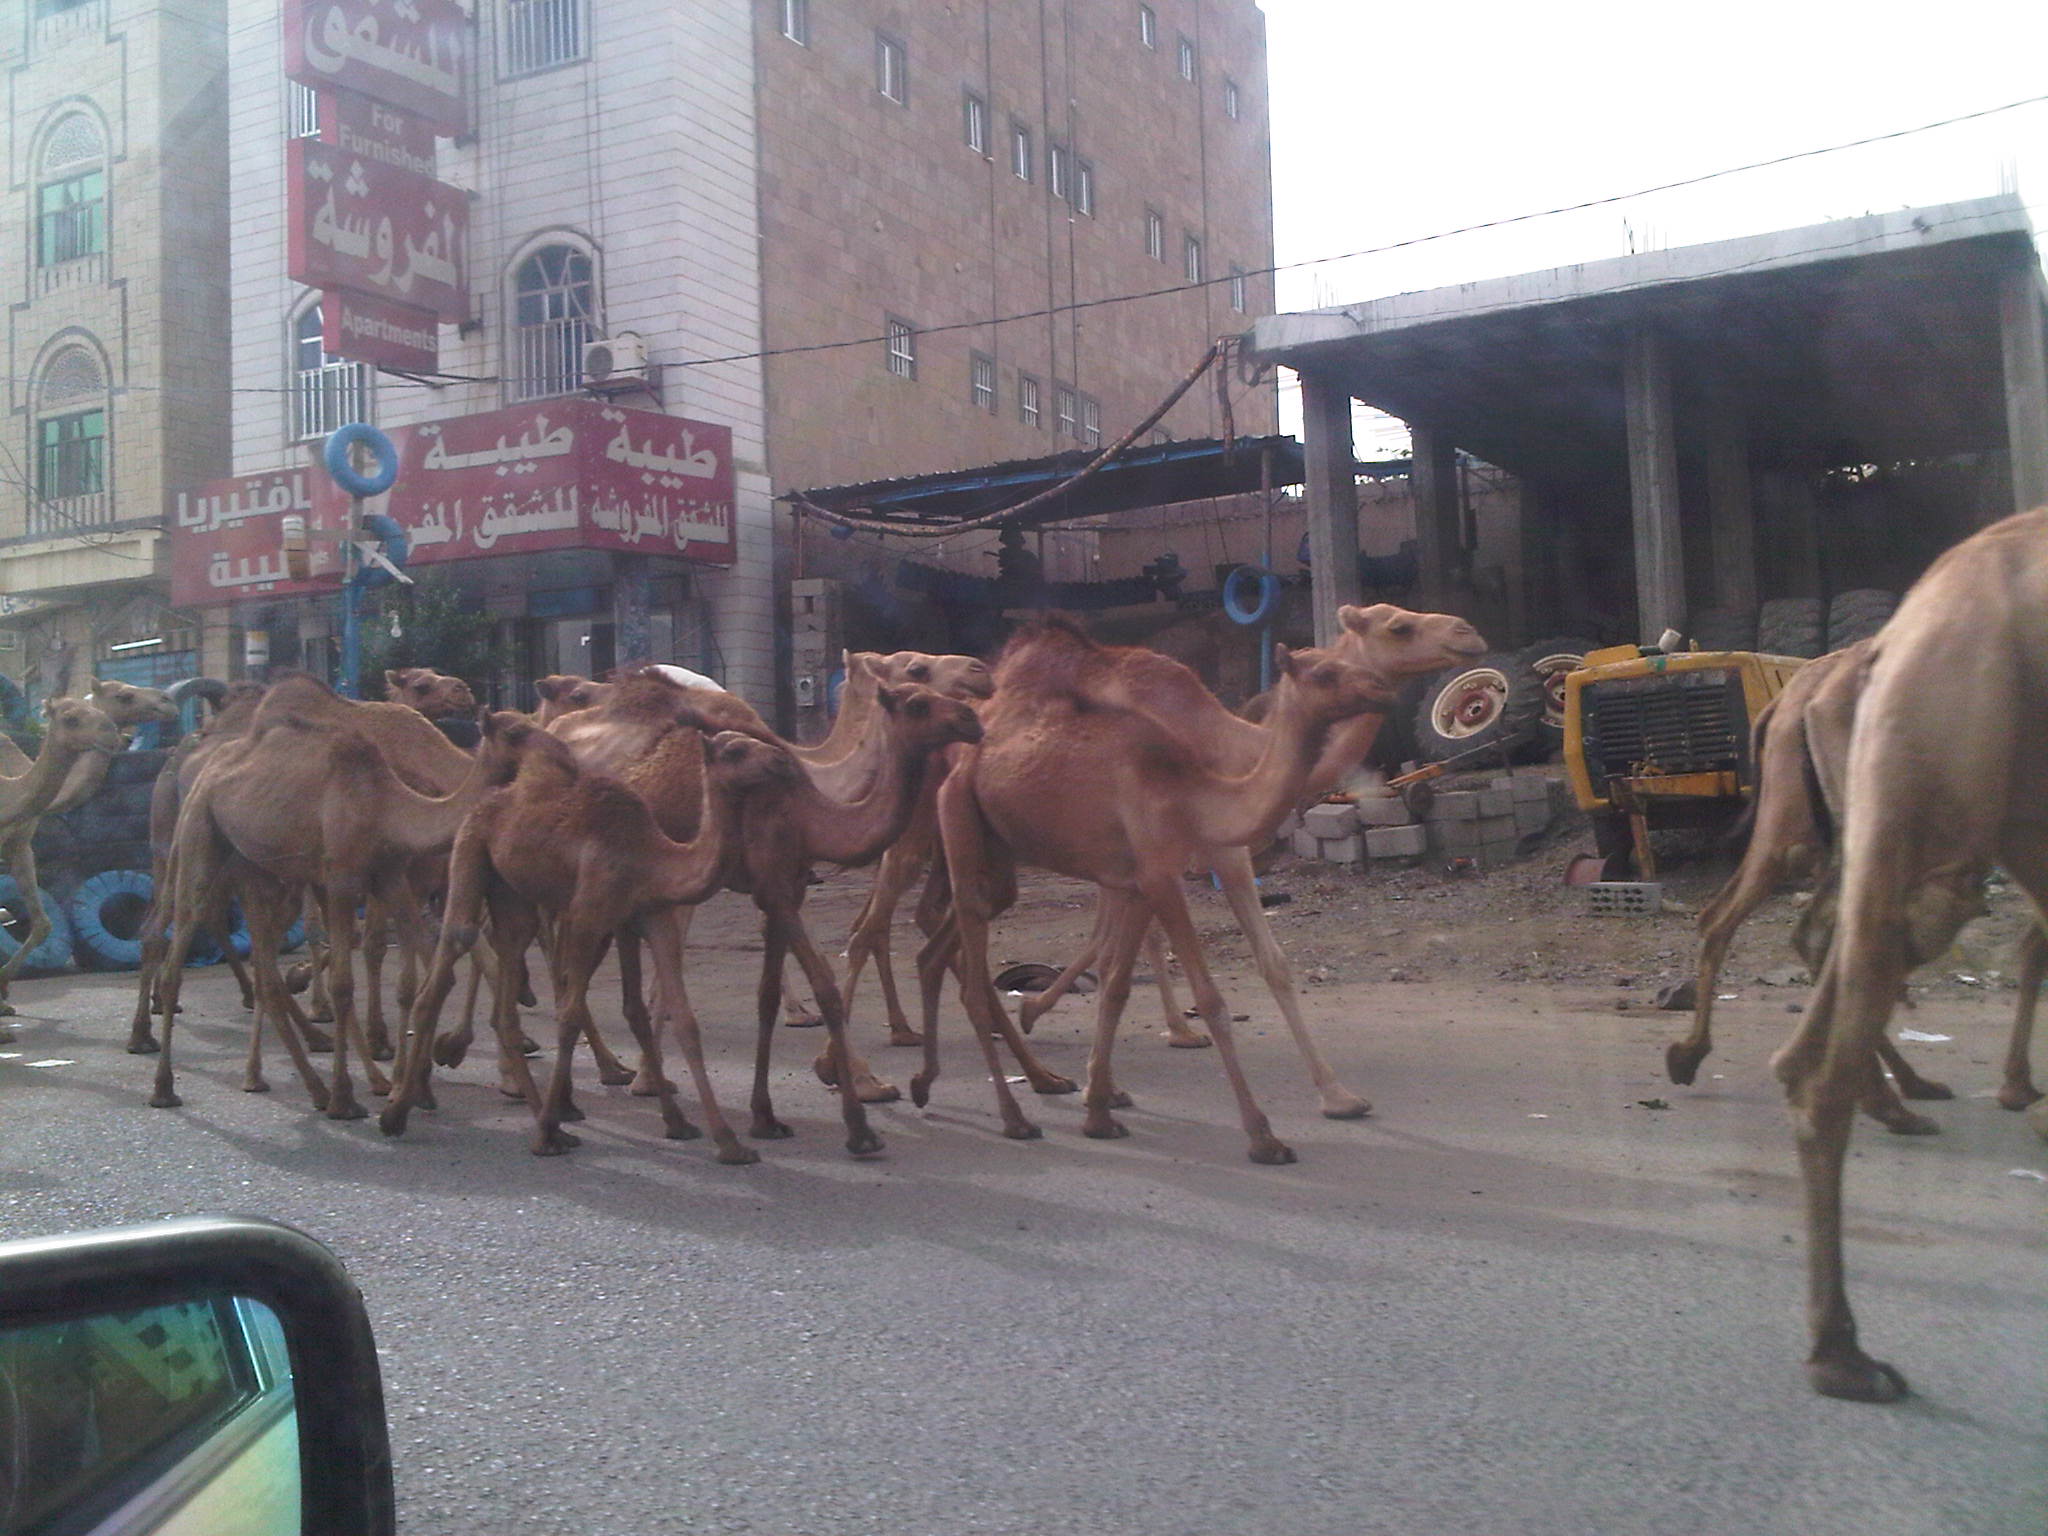 Camels in Taiz